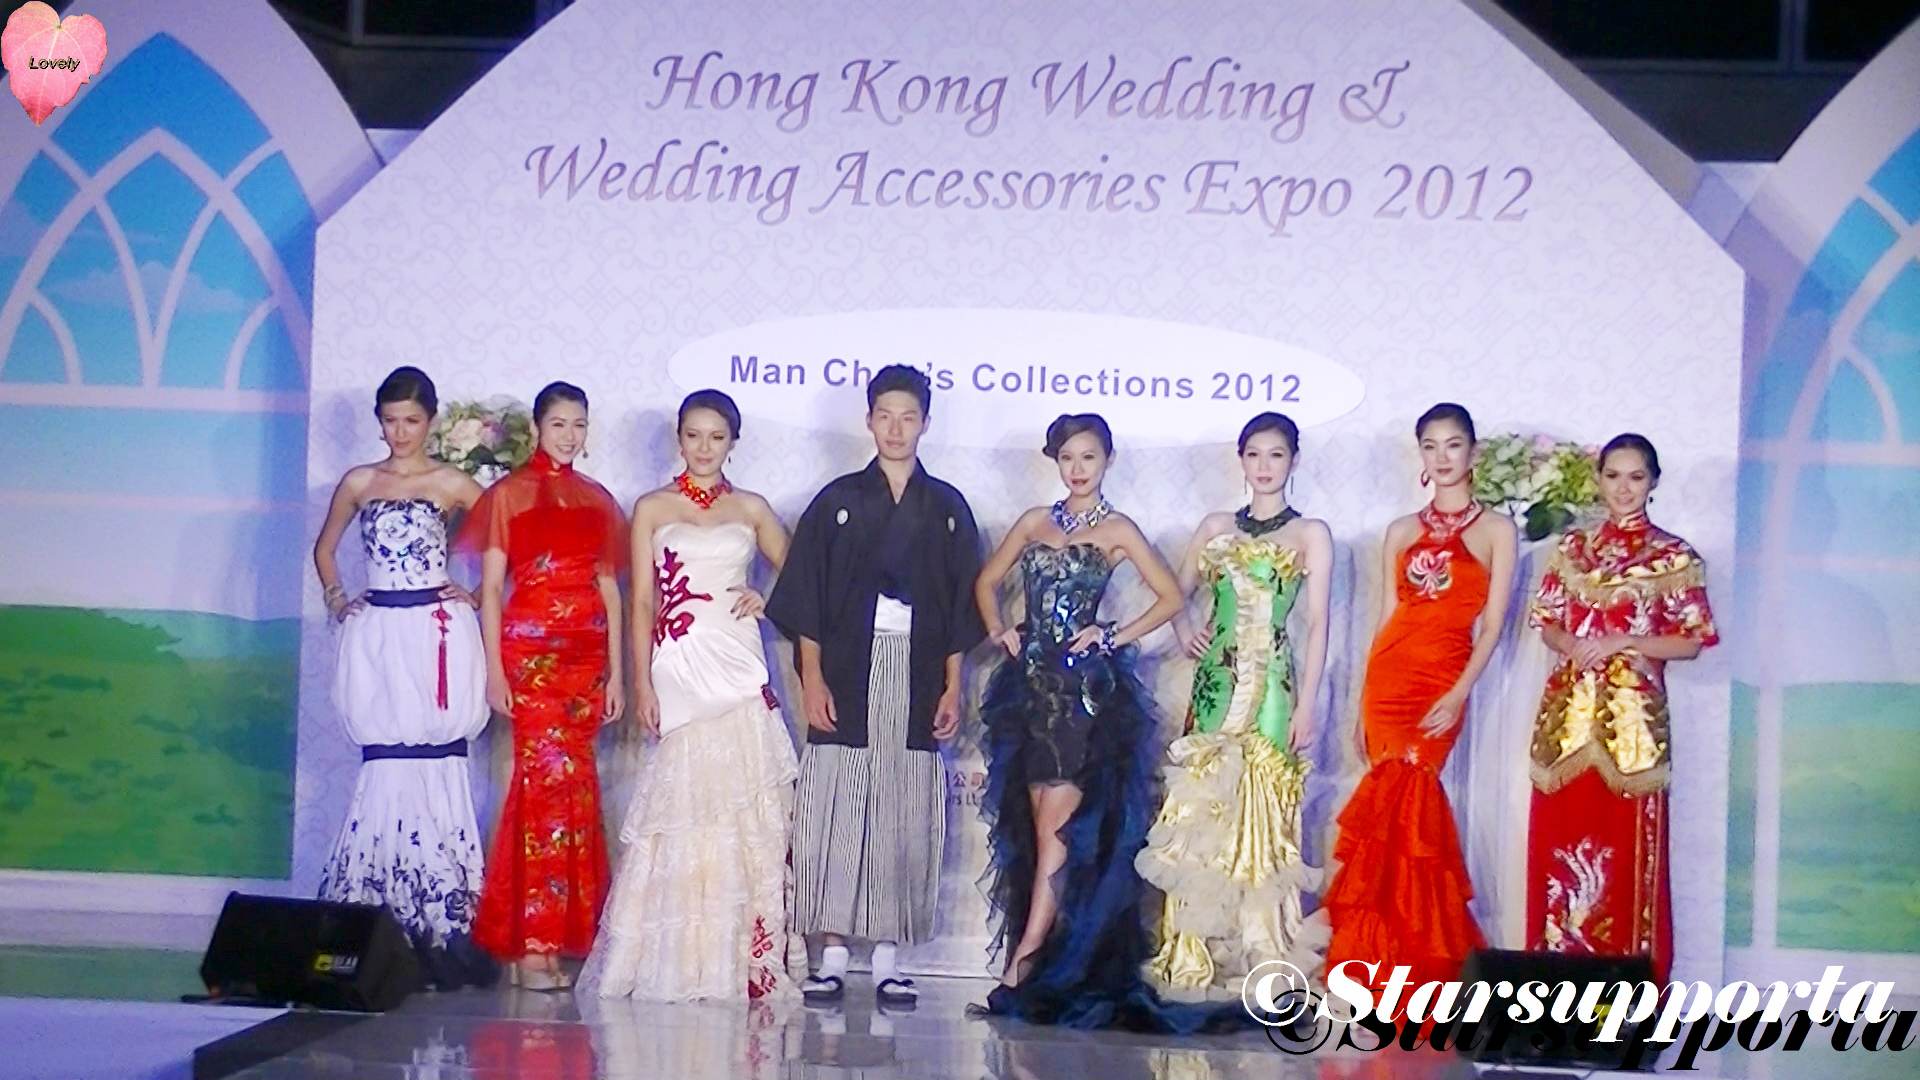 20120714 Hong Kong Wedding & Wedding Accessories Expo - Man Chan's Collections 2012 @ 香港會議展覽中心 HKCEC (video)